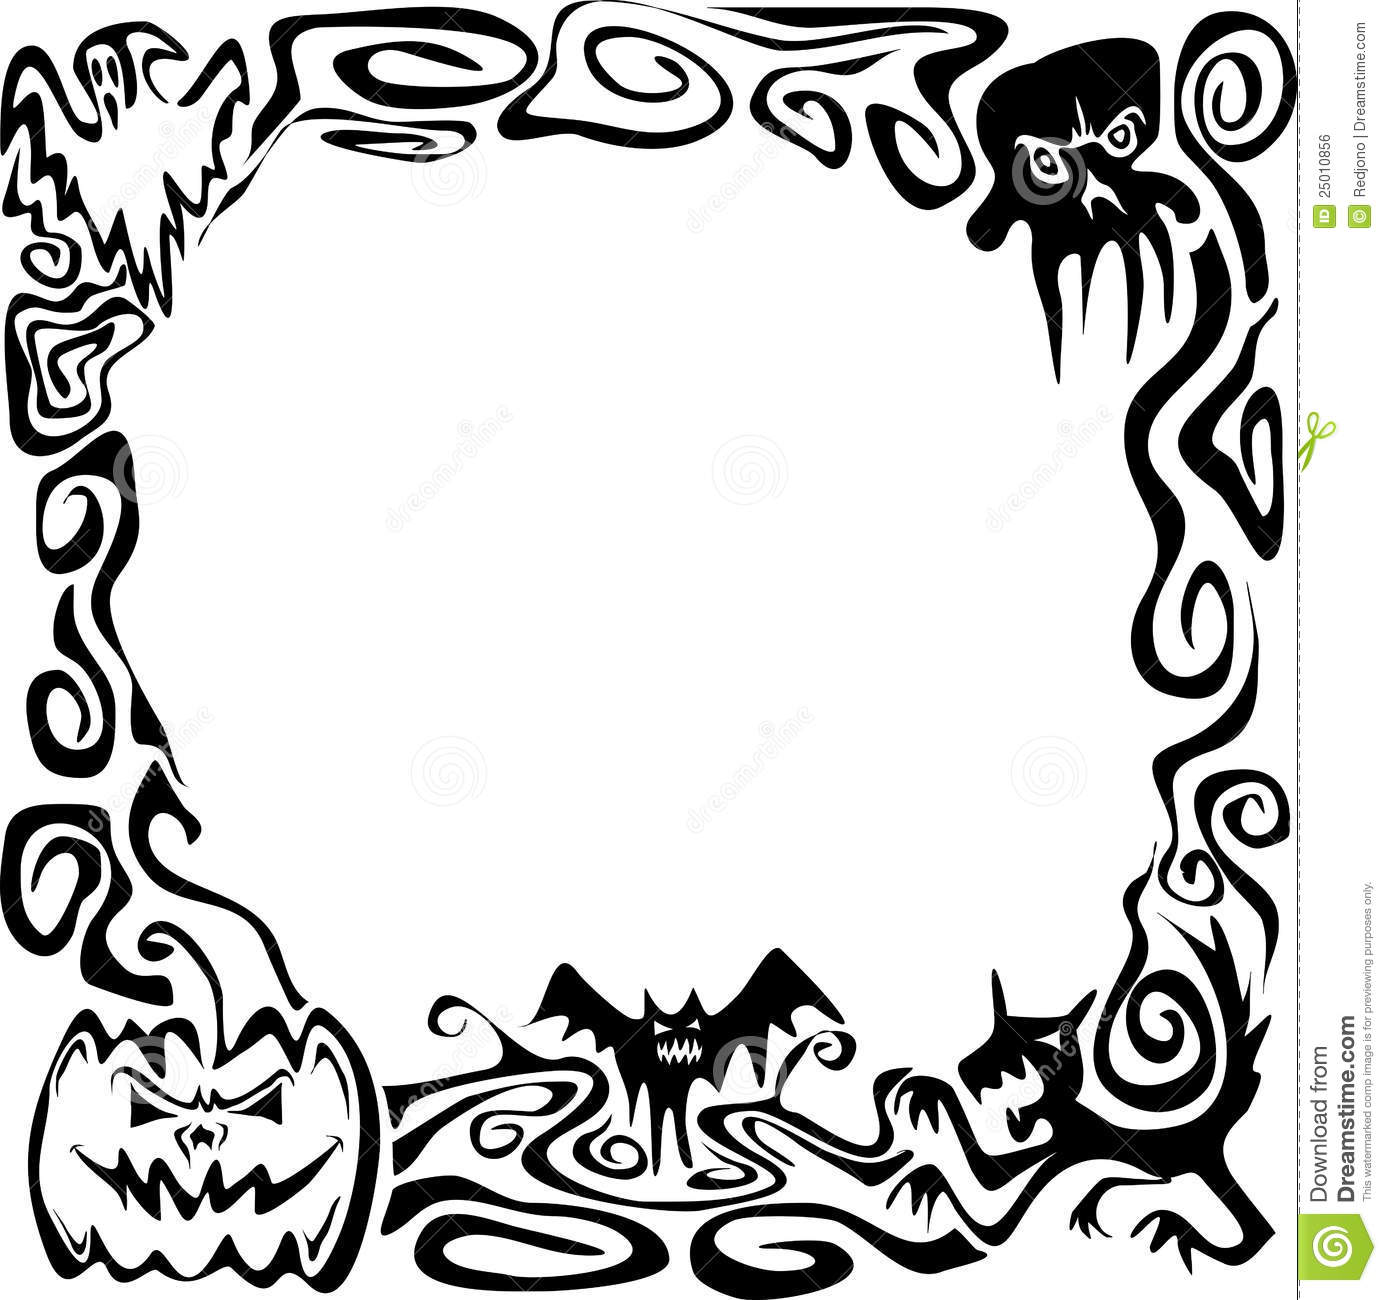 Black and White Halloween Border Clip Art Free